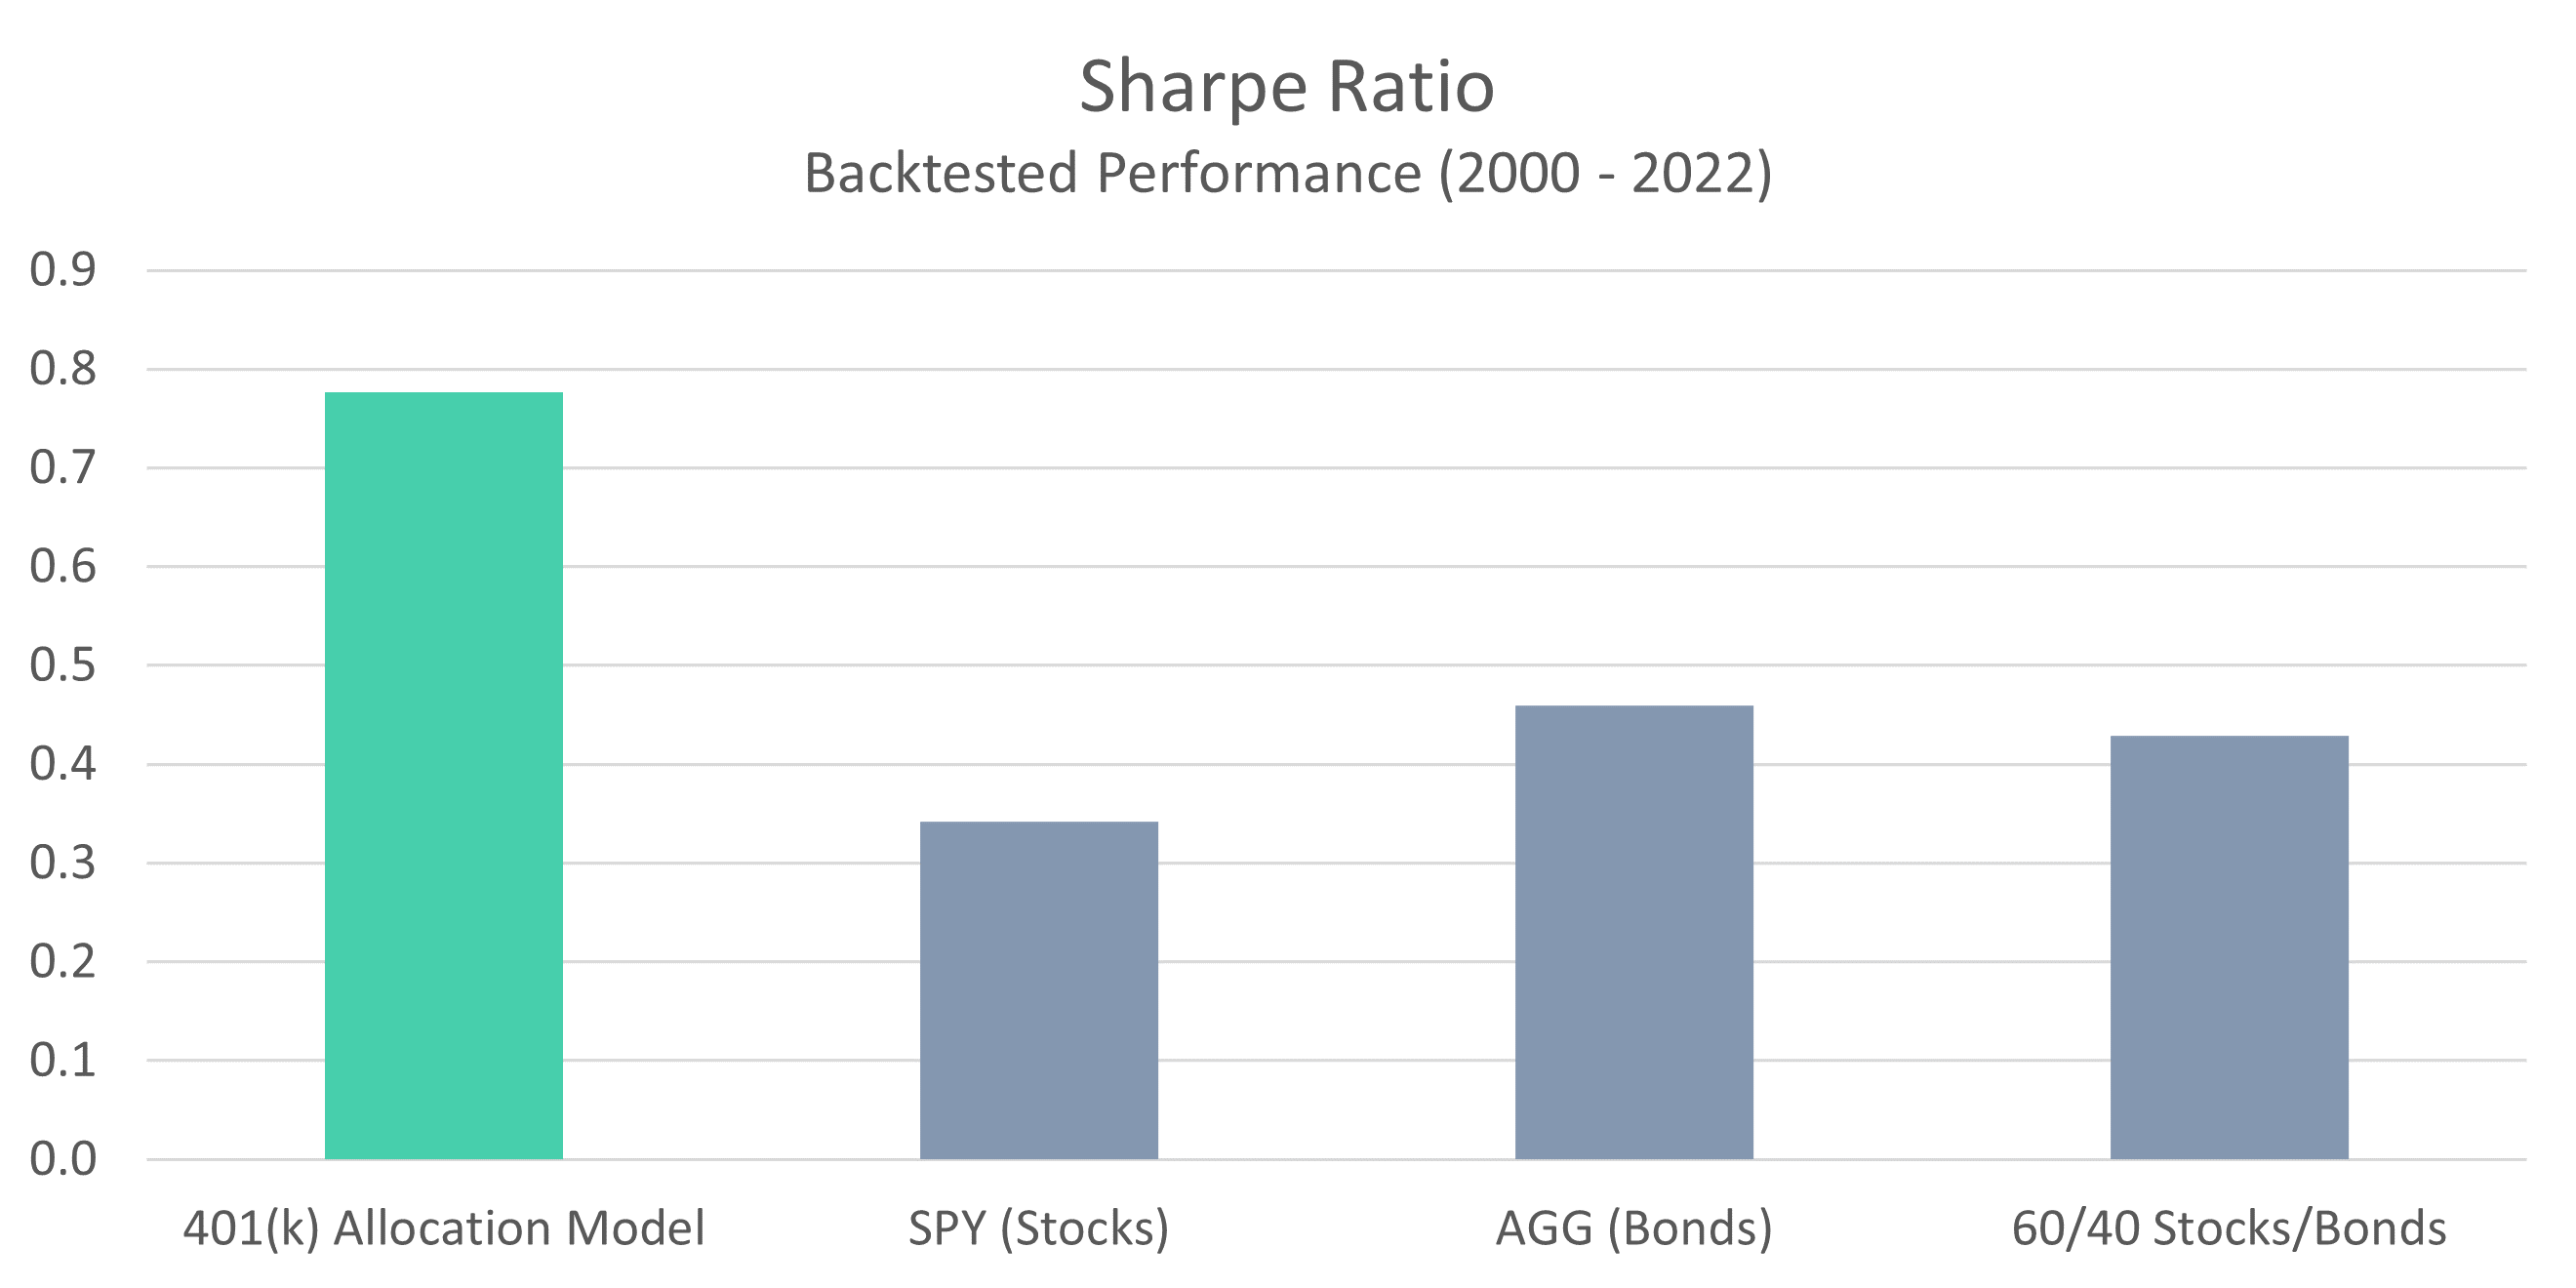 401 Model Sharpe Ratio